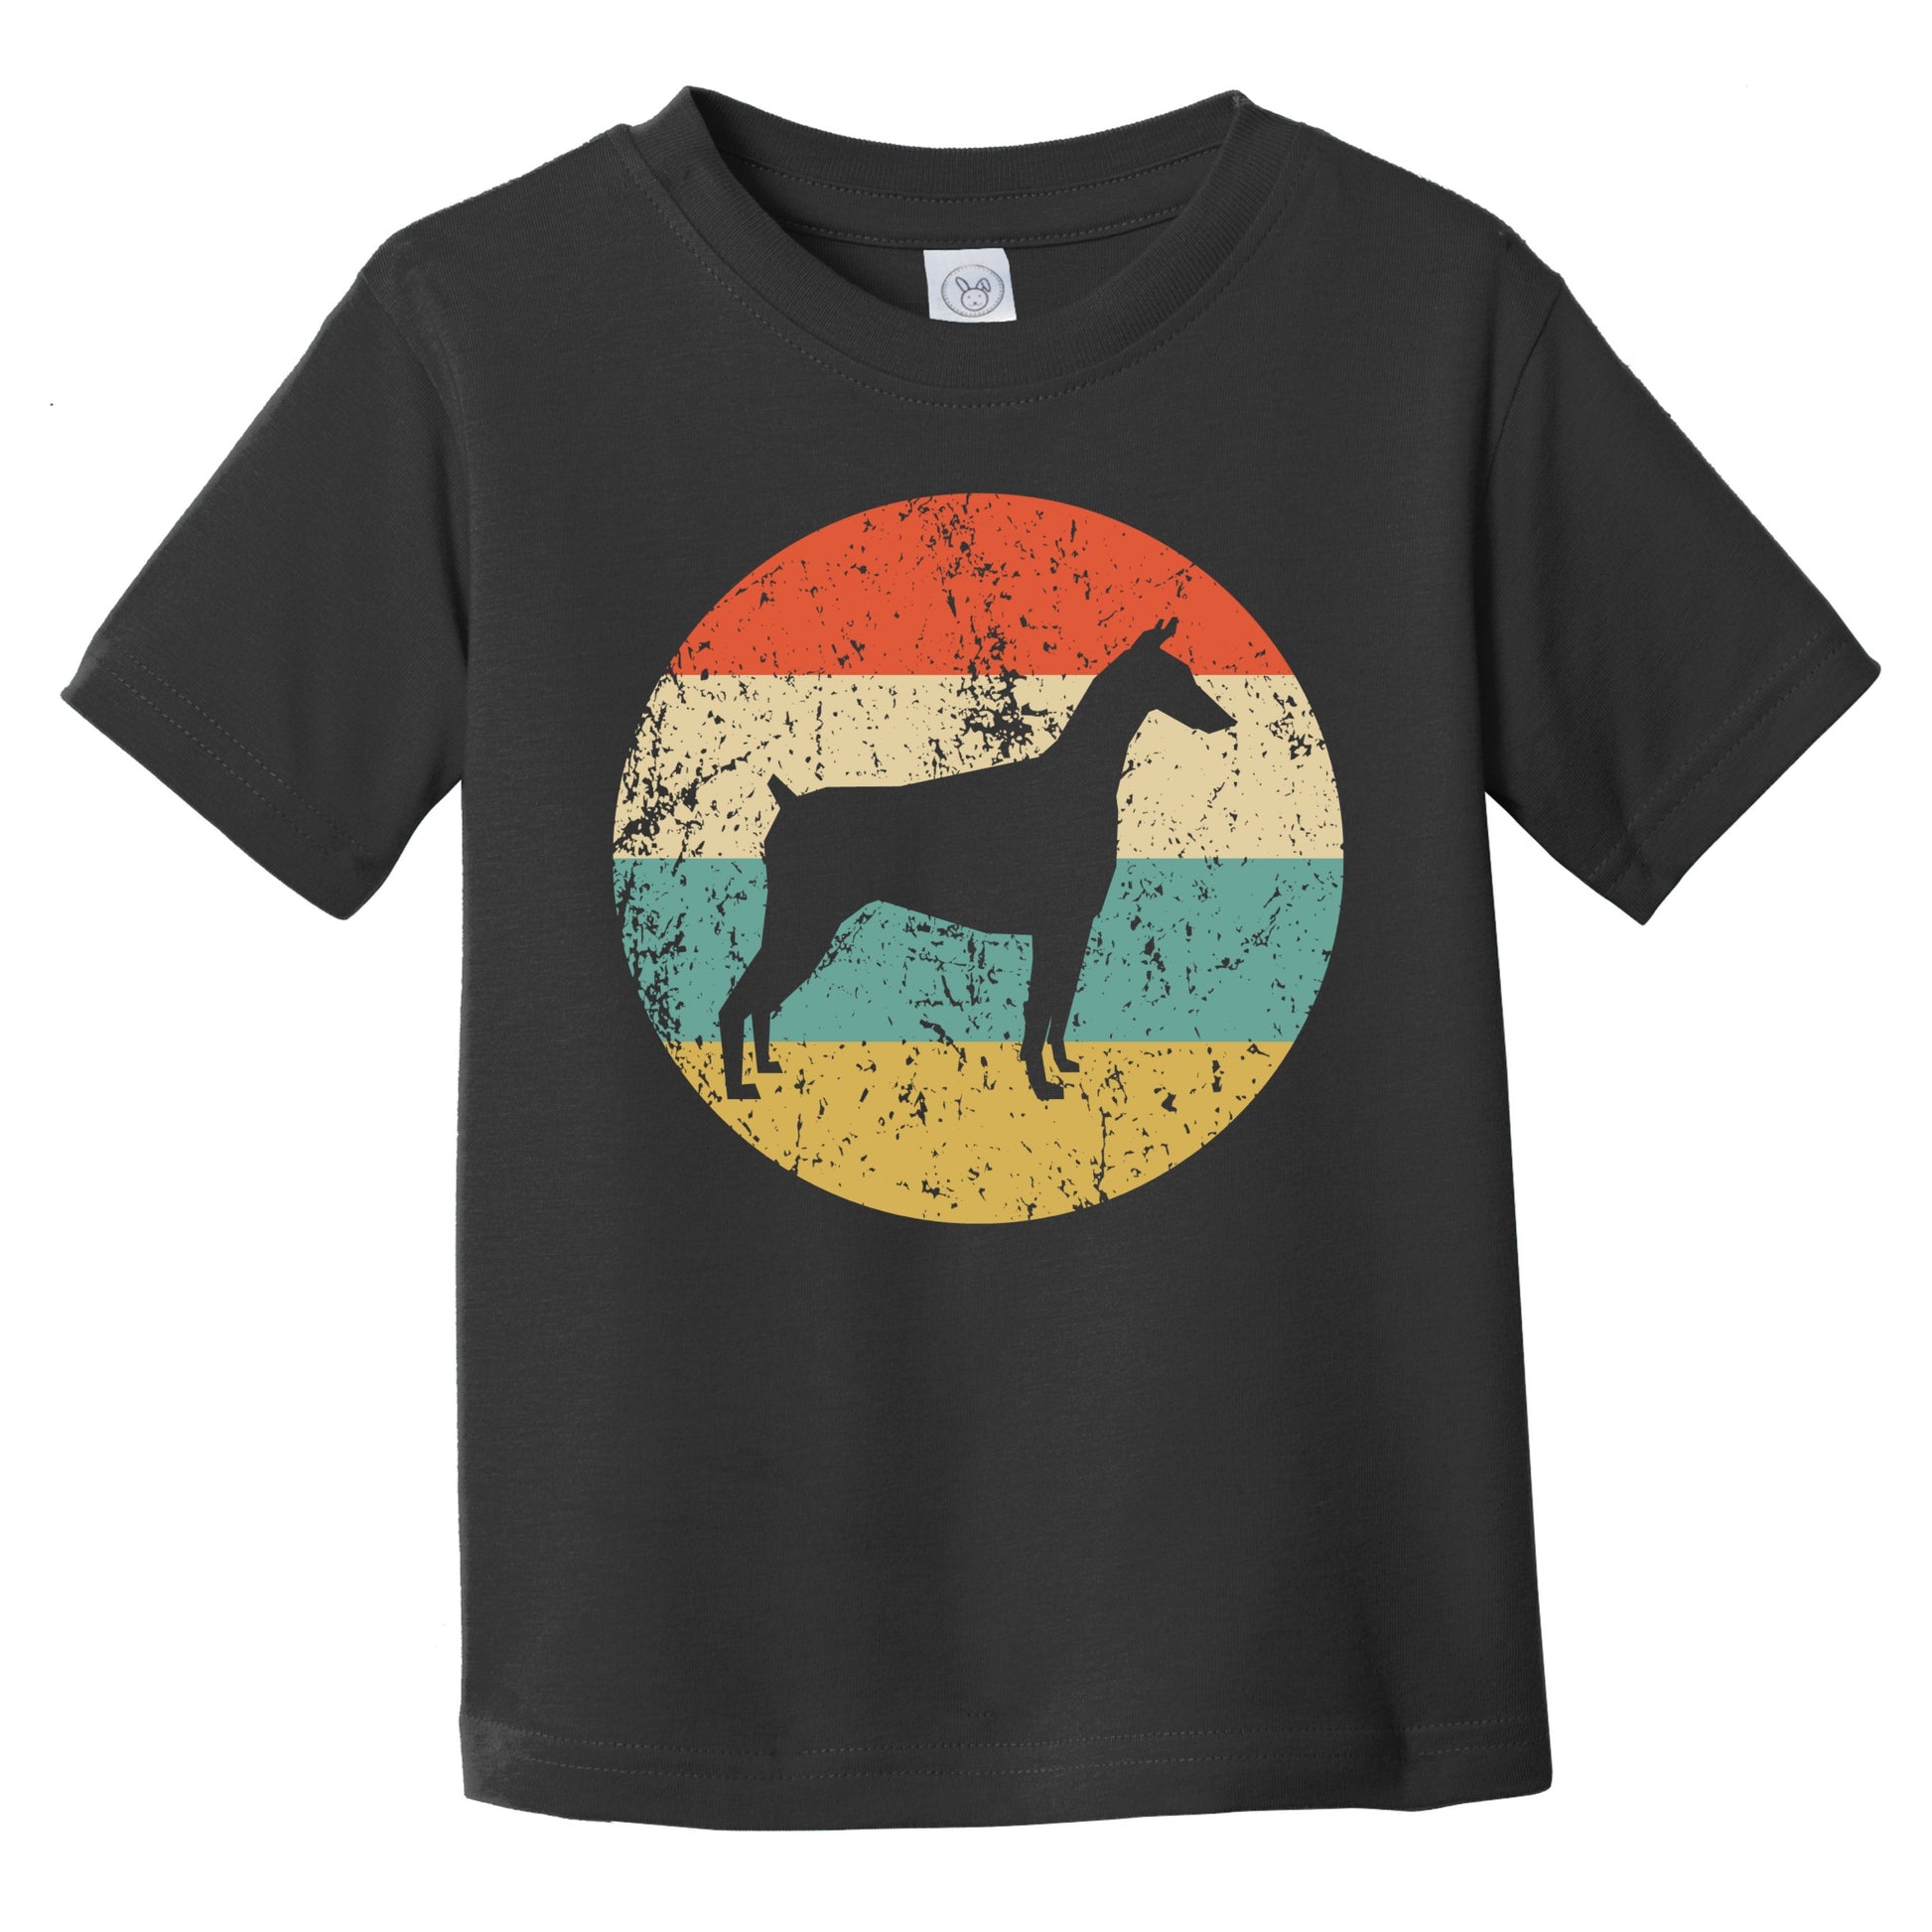 Retro Doberman Icon Dog Silhouette Infant Toddler T-Shirt